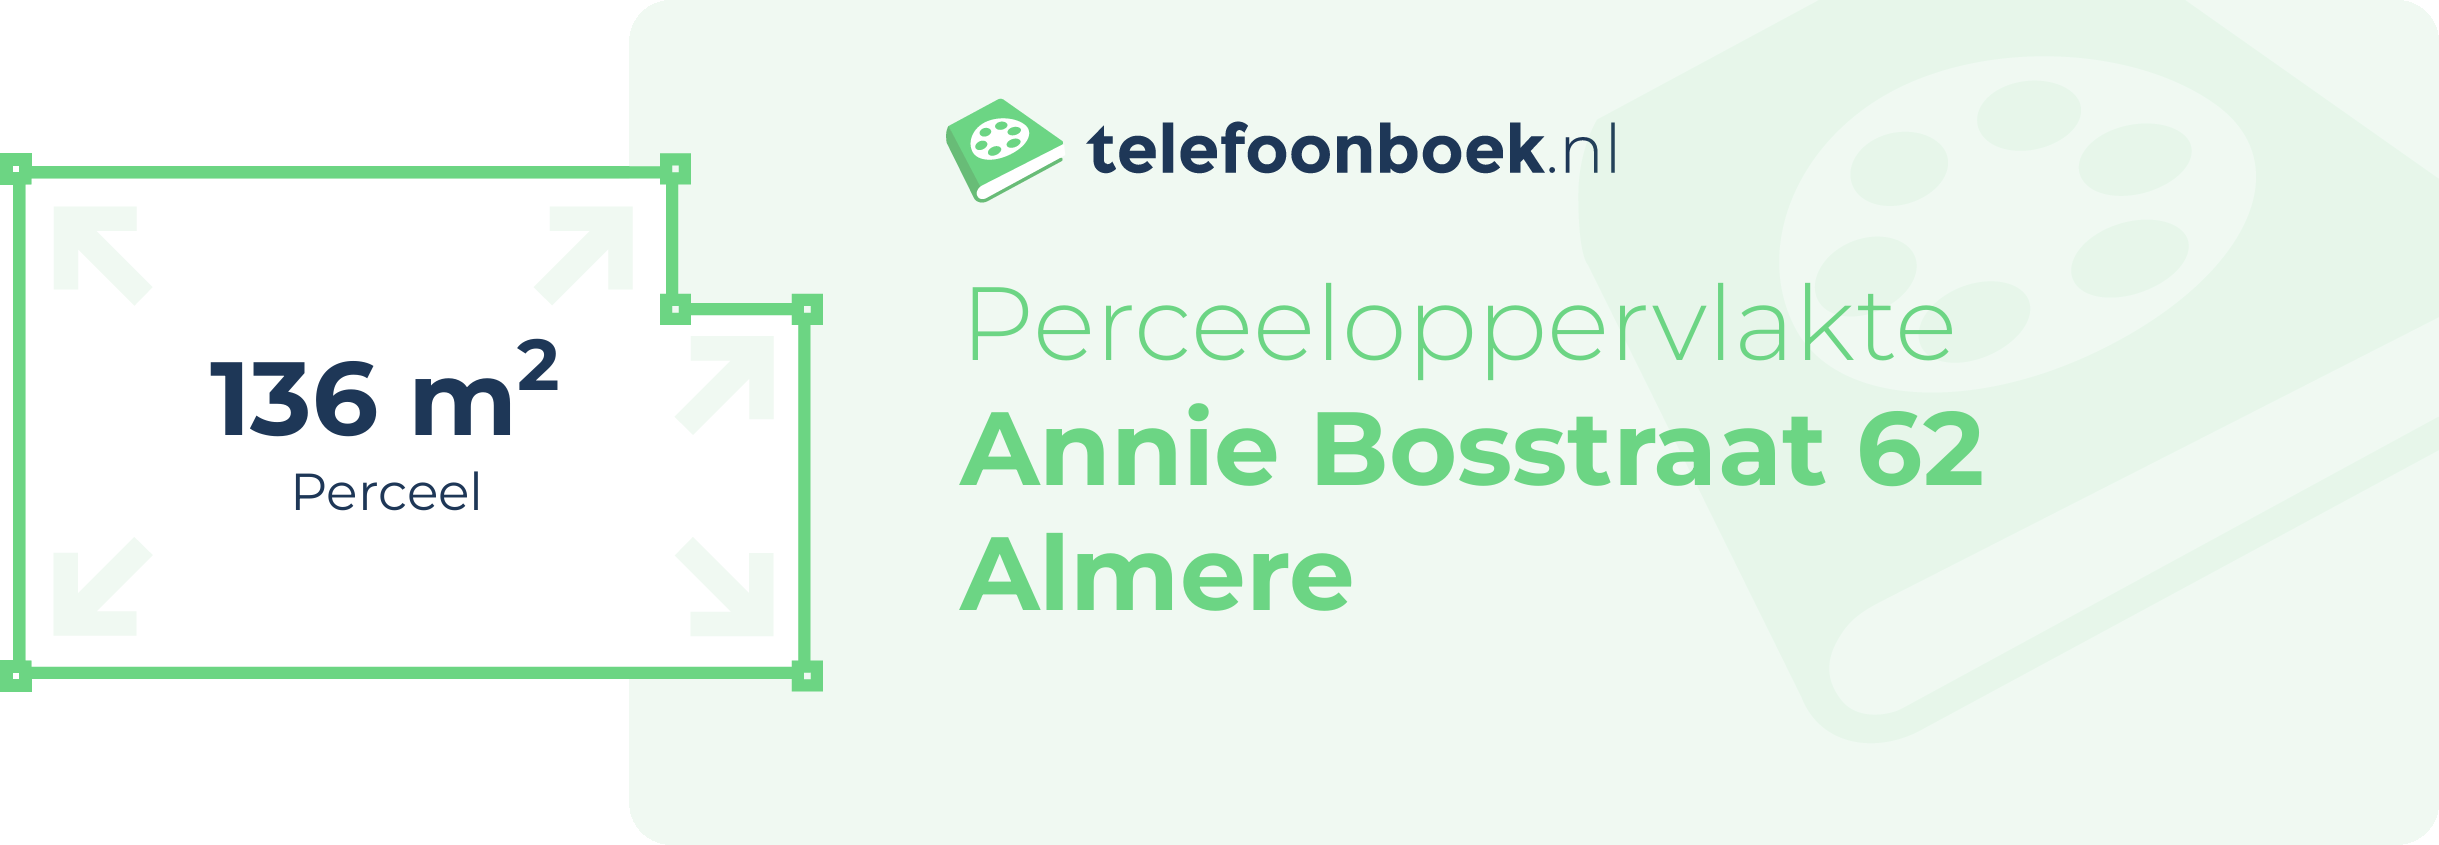 Perceeloppervlakte Annie Bosstraat 62 Almere